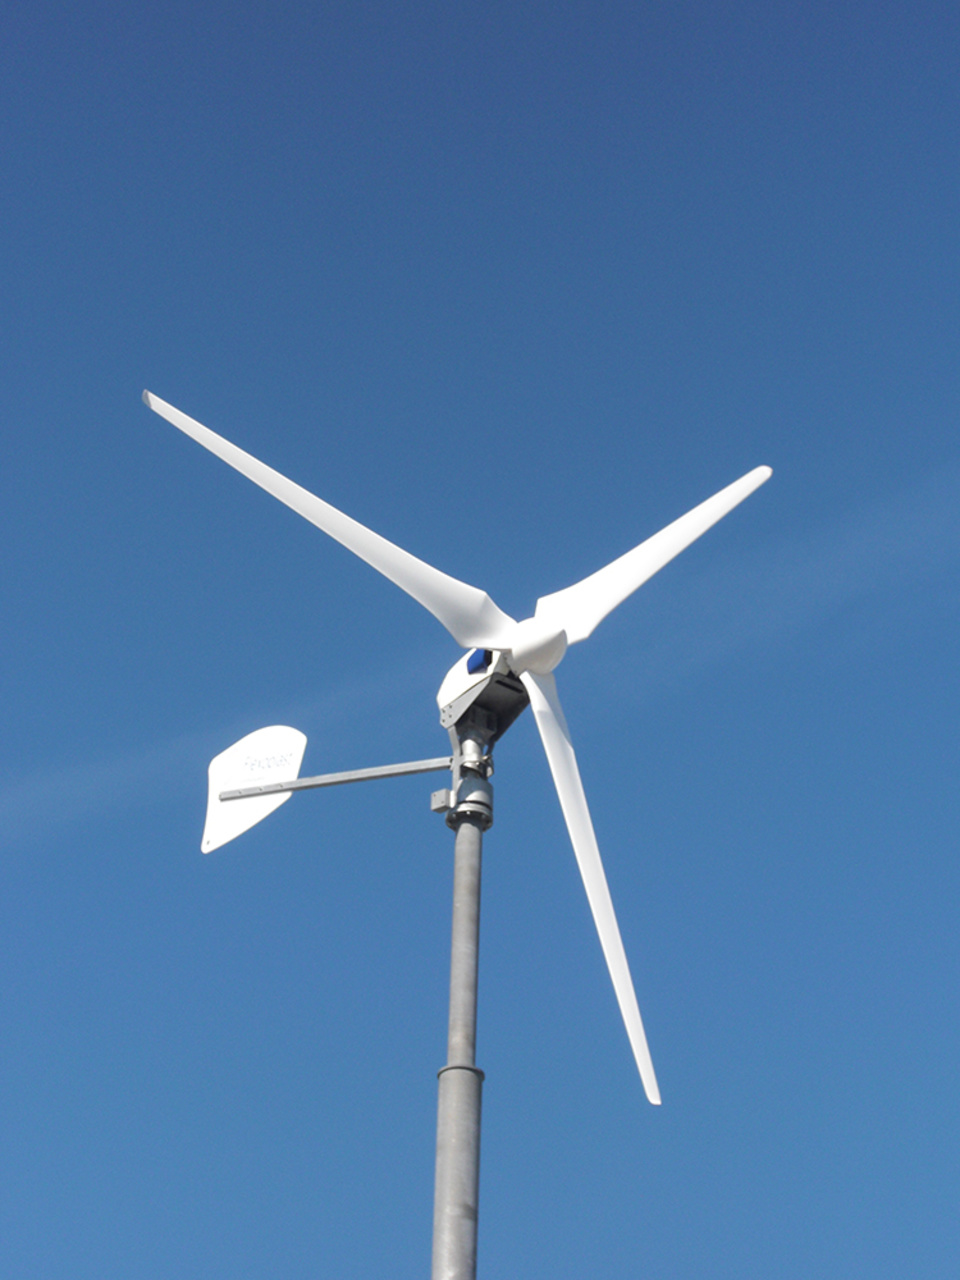 Windkraft2 bei MKS GmbH, Katzer & Kramer in Hof